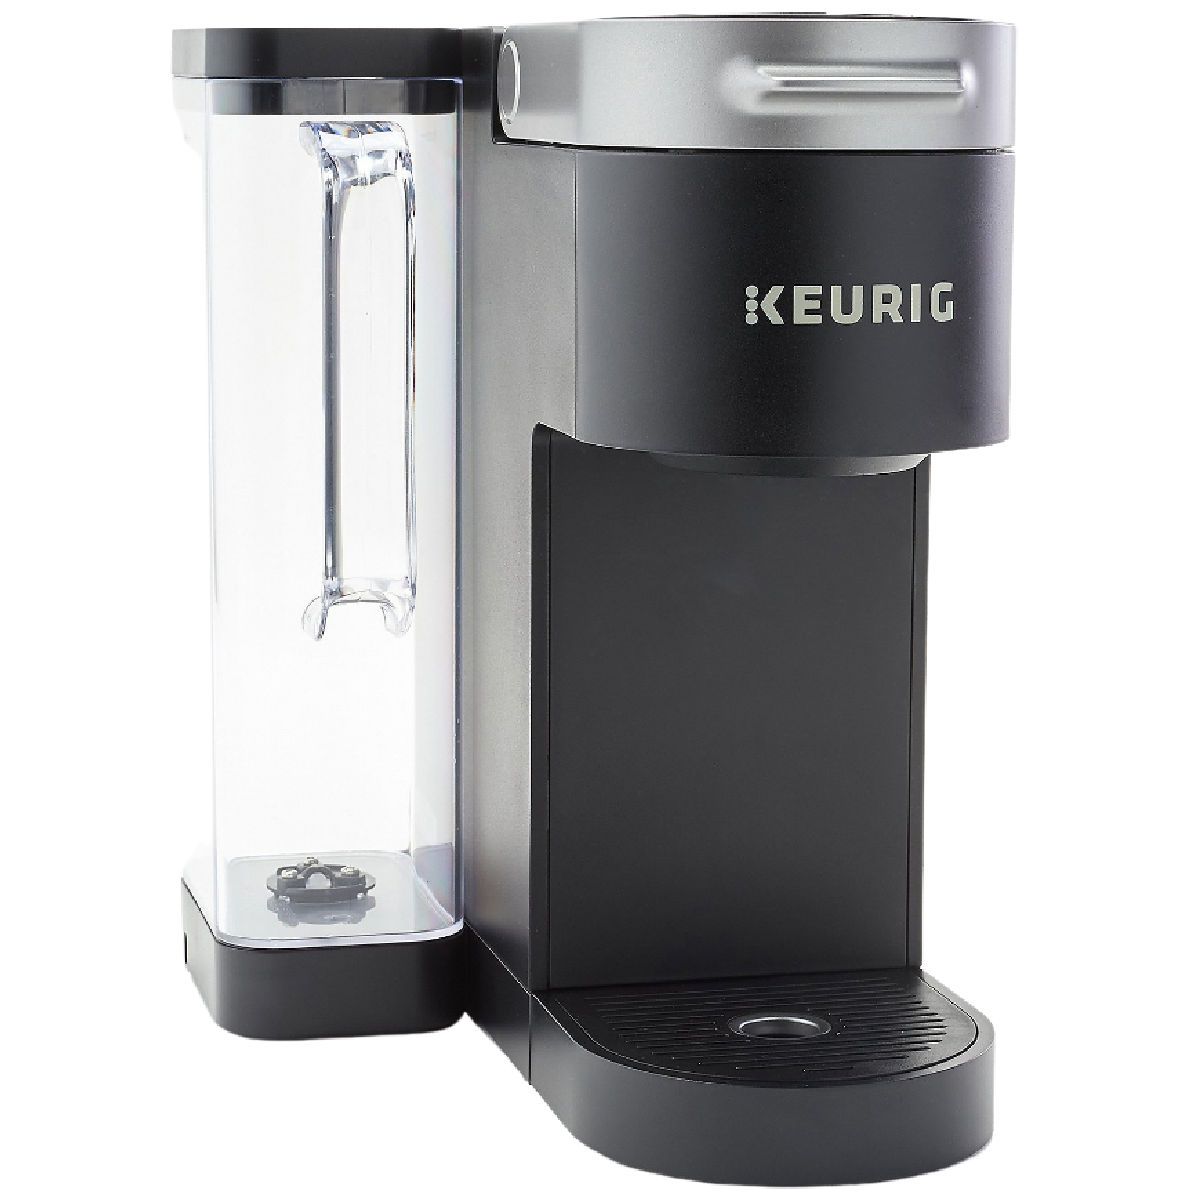 Keurig KSupreme Coffee Maker 99.98 (48 off) QVC